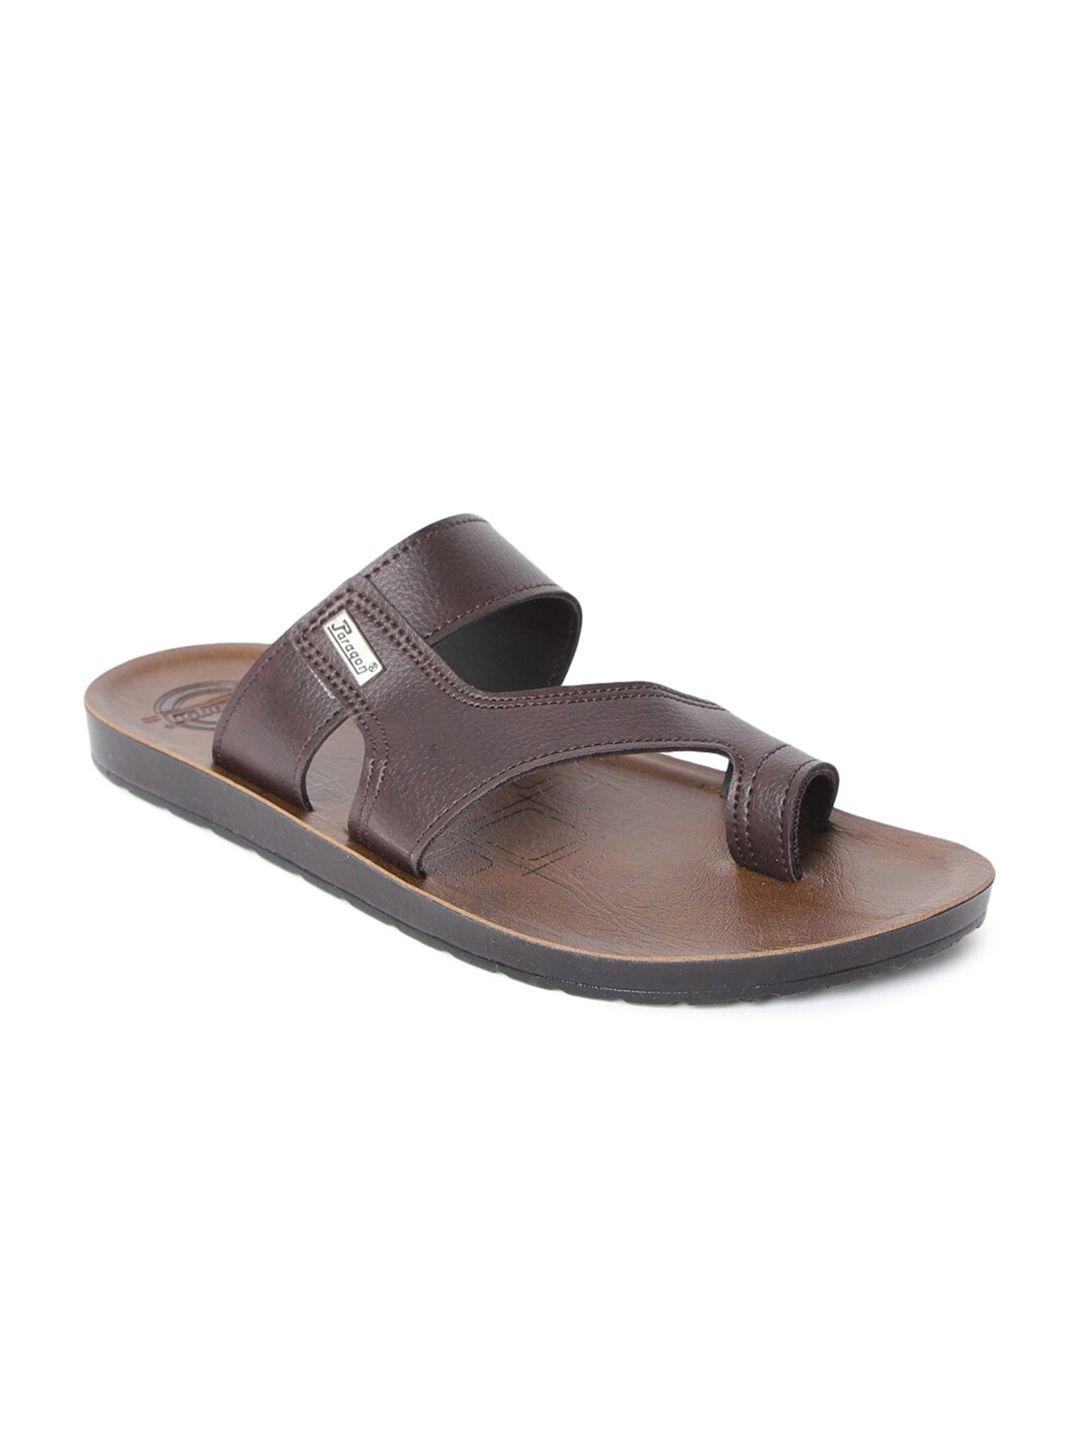 paragon men solid comfort sandals